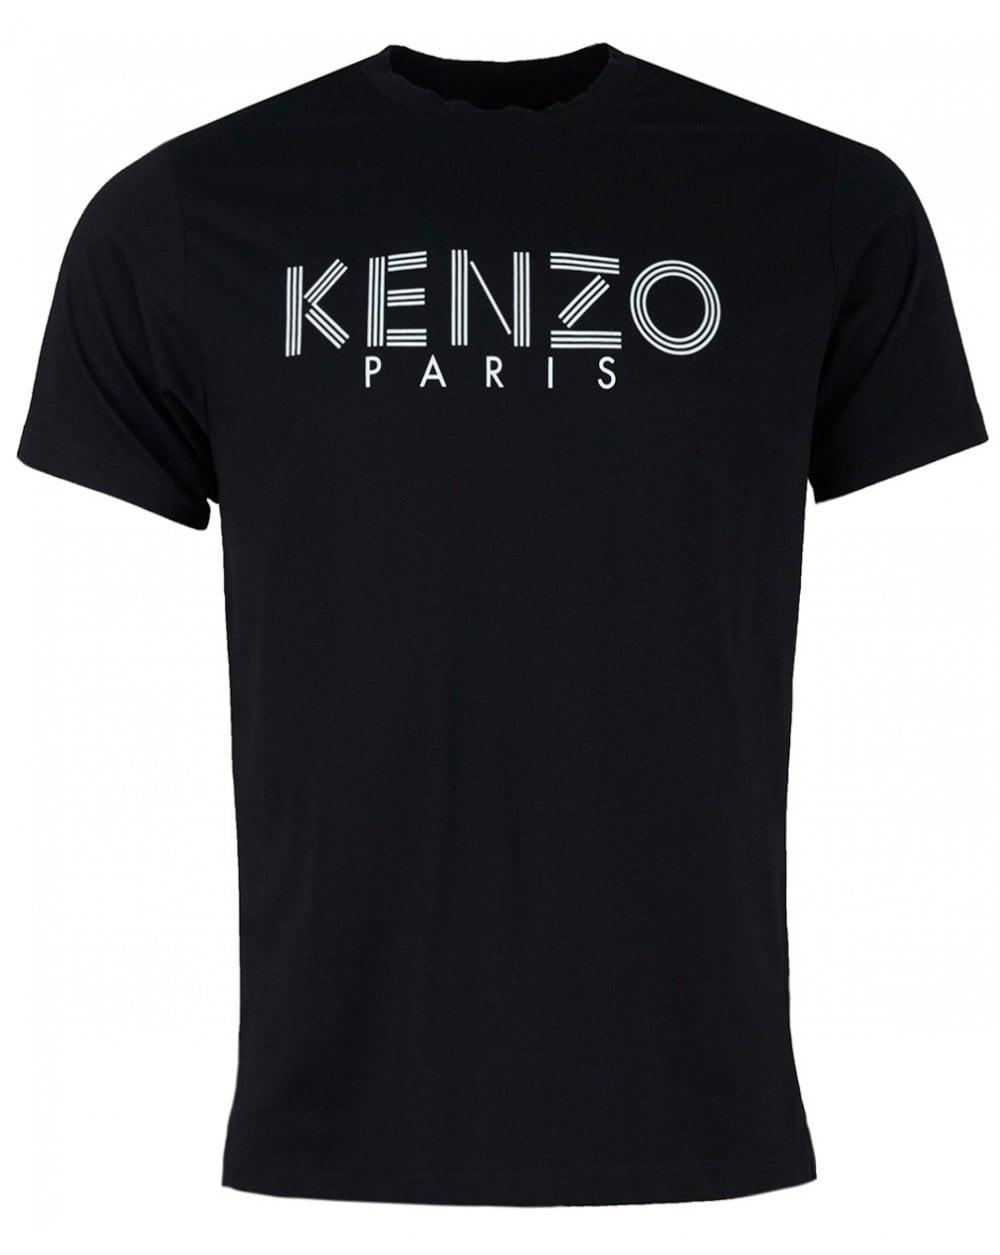 Kenzo Paris Logo - Kenzo Paris Logo Crew Neck T Shirt From Psyche UK